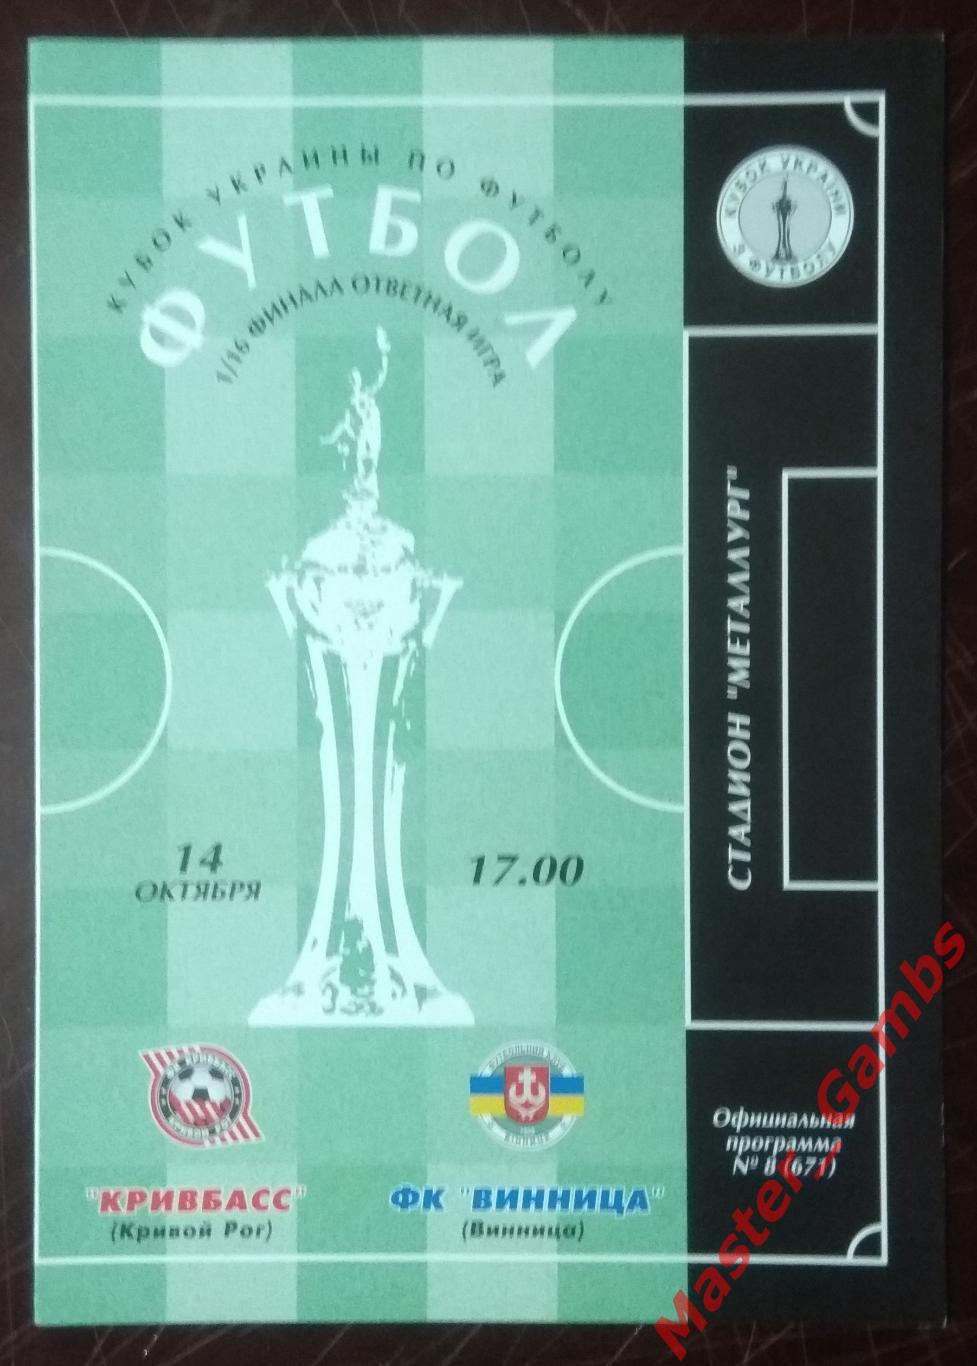 Кривбасс Кривой Рог - ФК Винница 2001/2002 кубок 1/16*